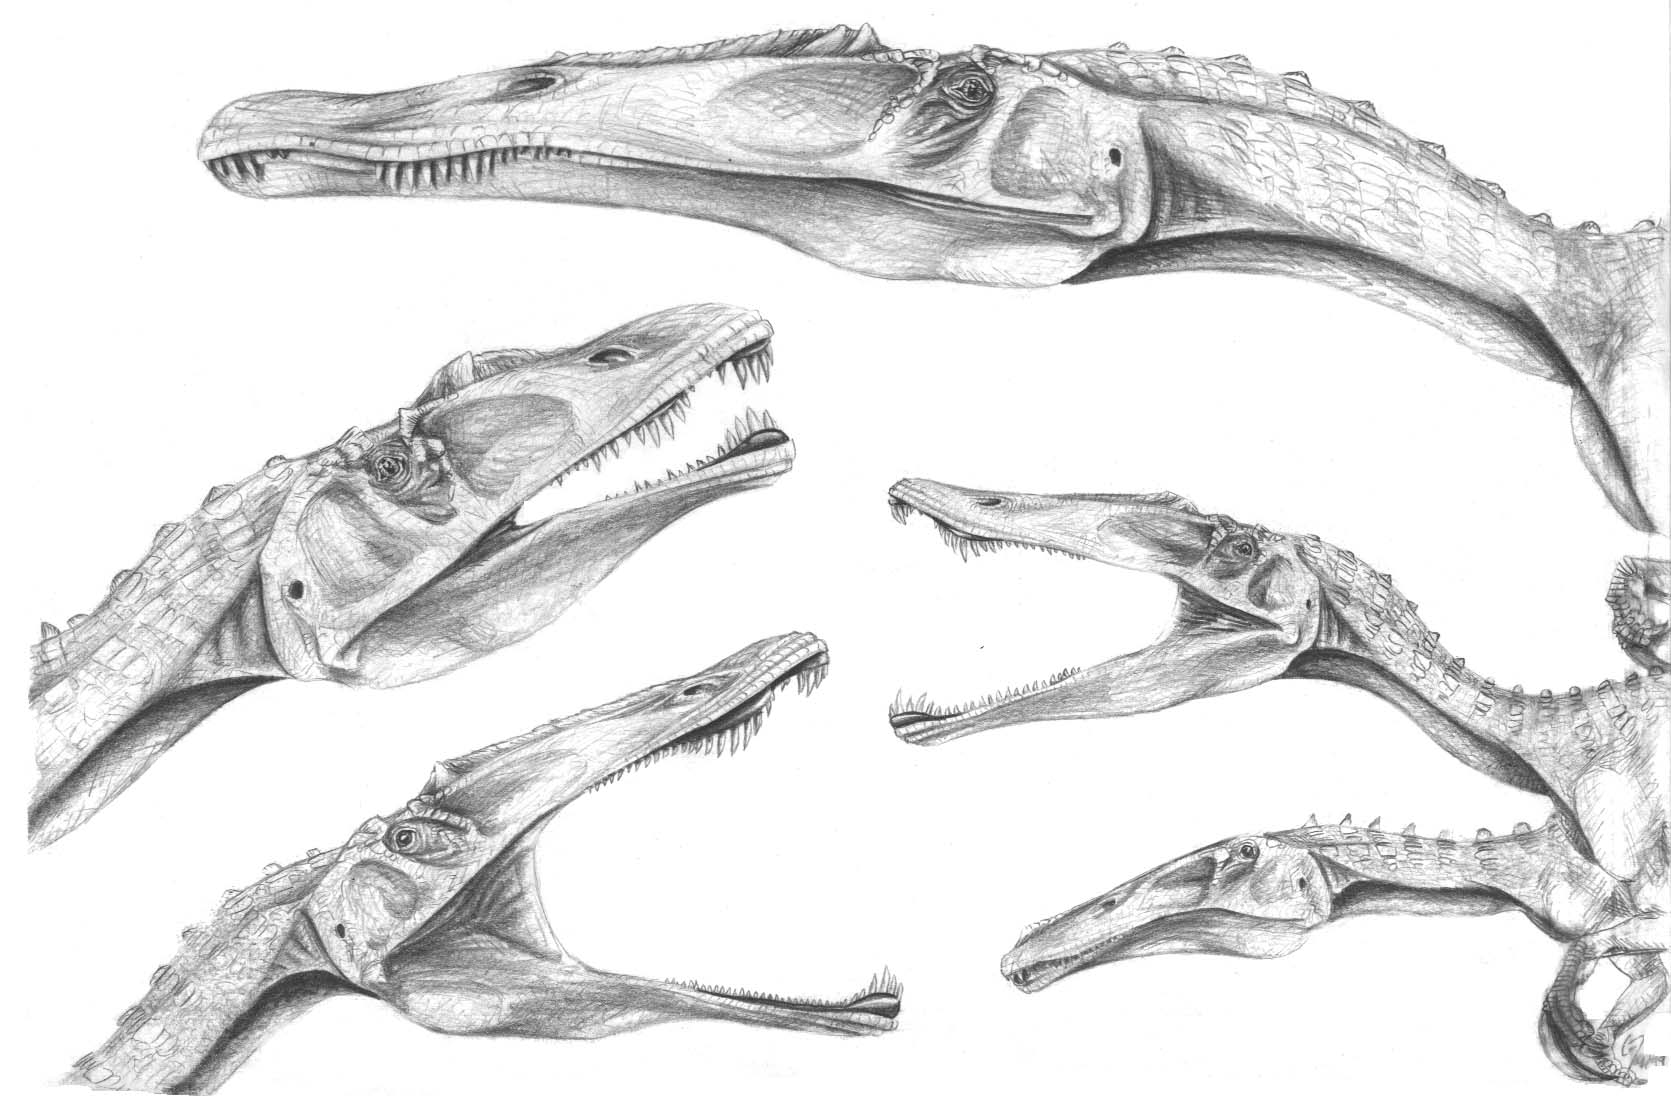 Head studies of various spinosaur genera